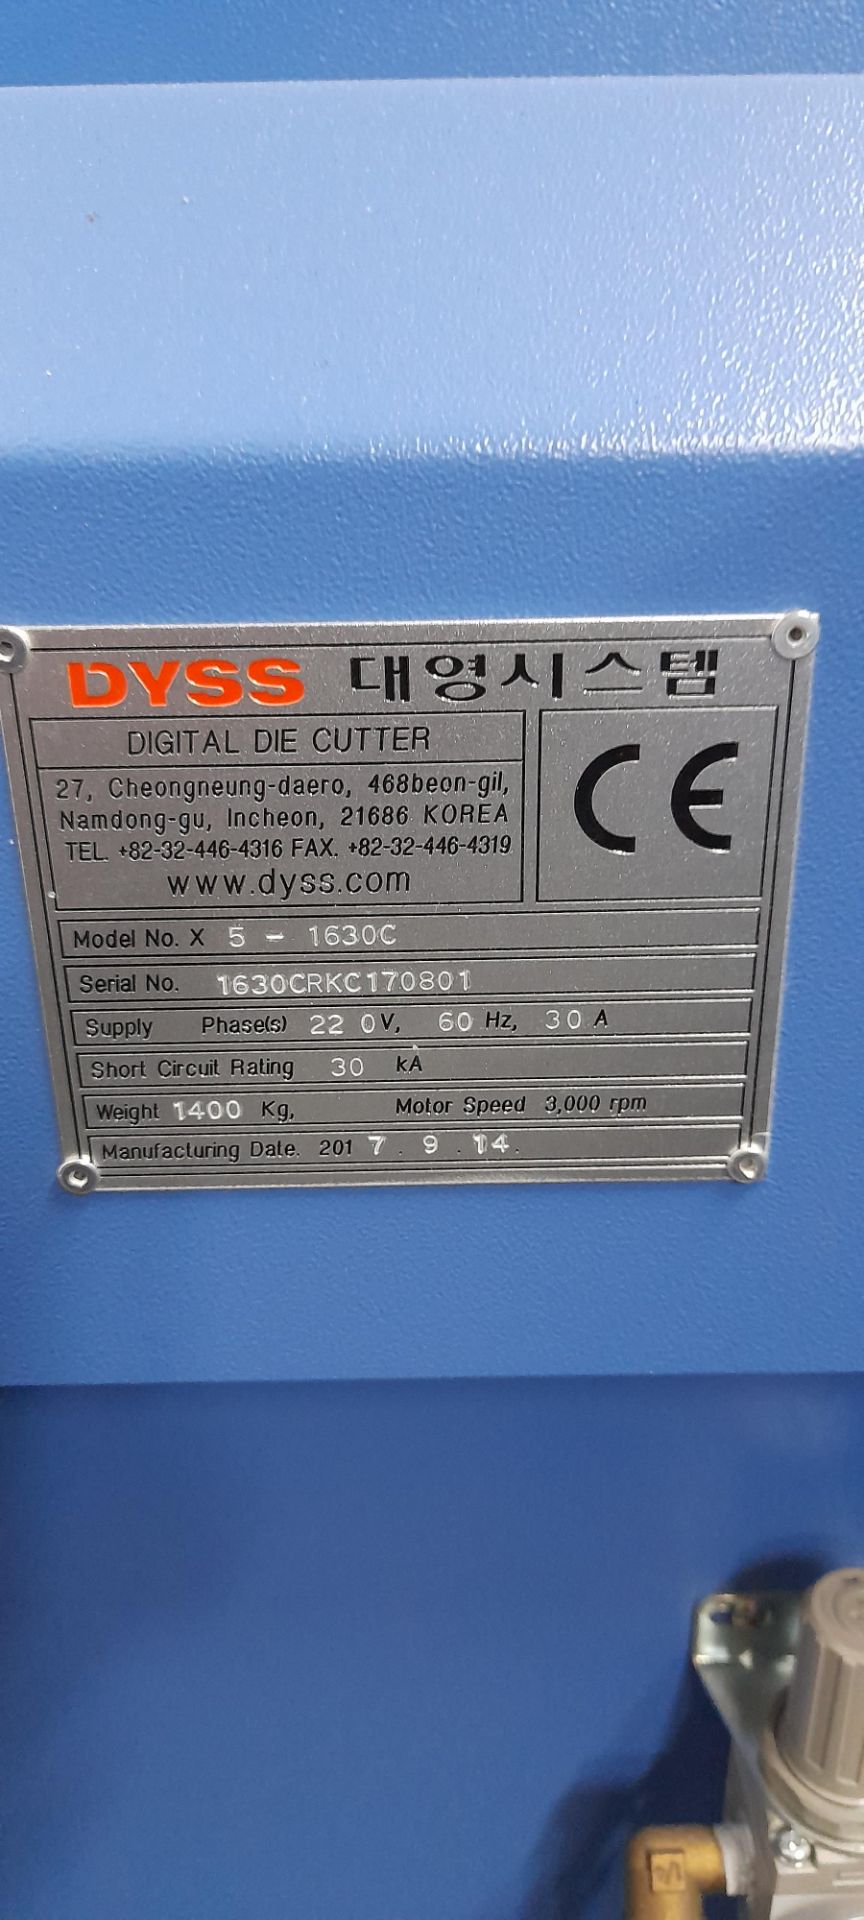 DYSS T-Head X5-1630C Digital Die Cutter. (14/9/2017) - Image 2 of 5